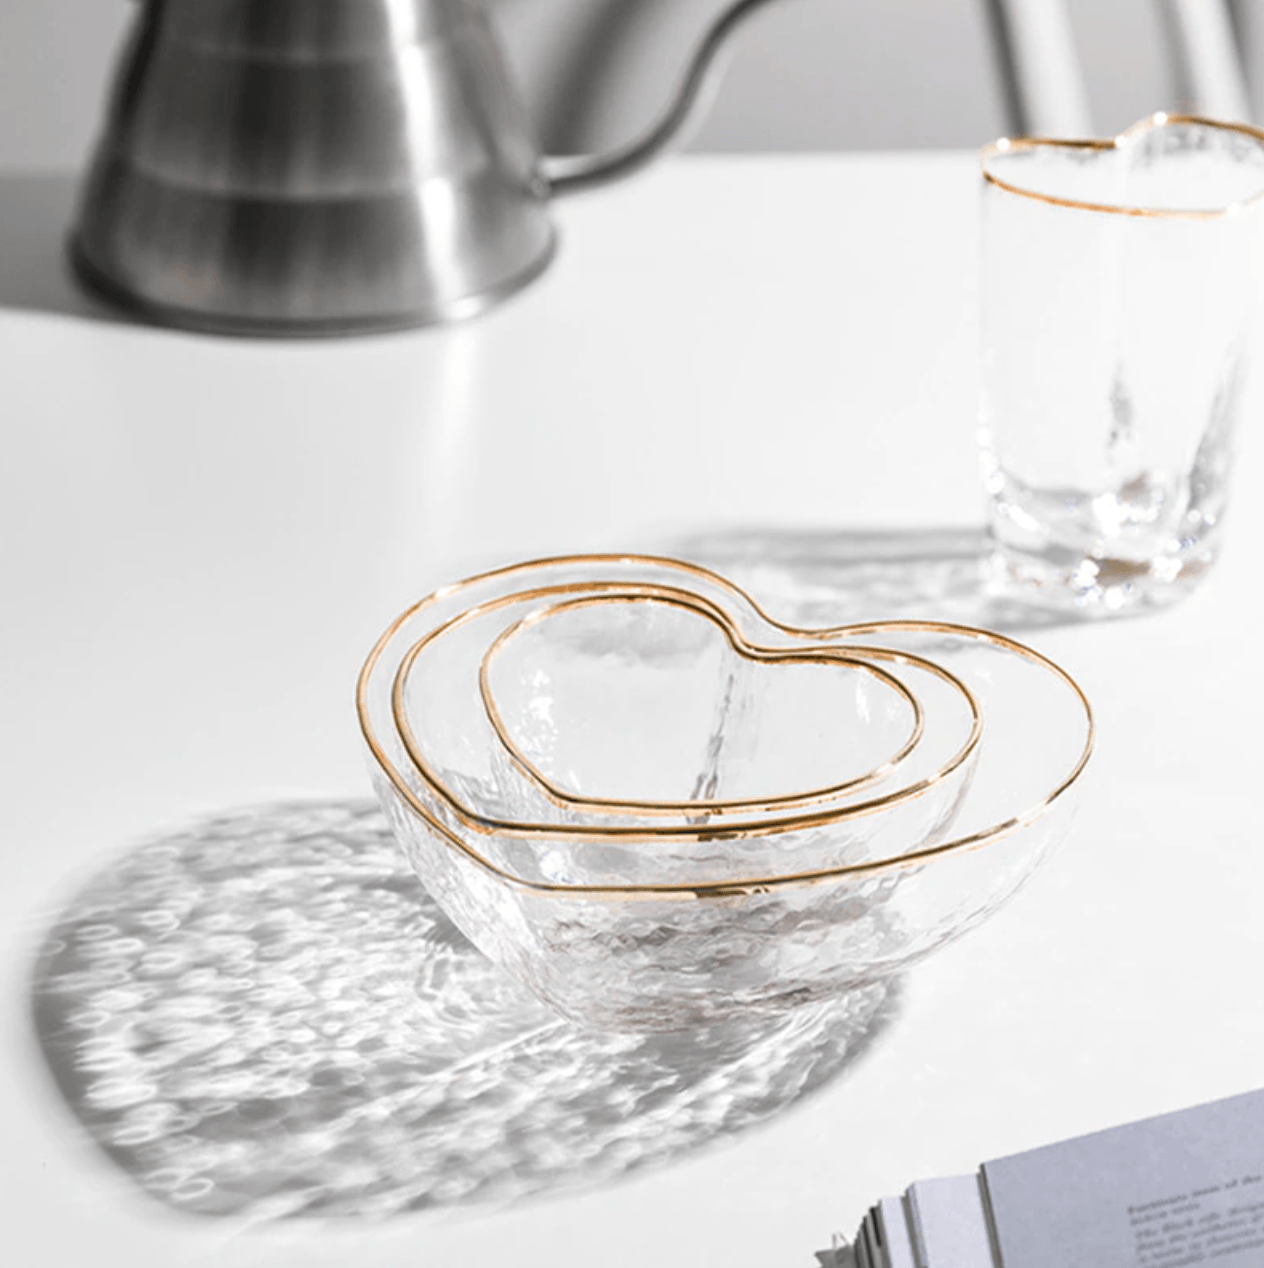 Dinnerware Glass Golden Heart Bowls + Cup sold by Fleurlovin, Free Shipping Worldwide